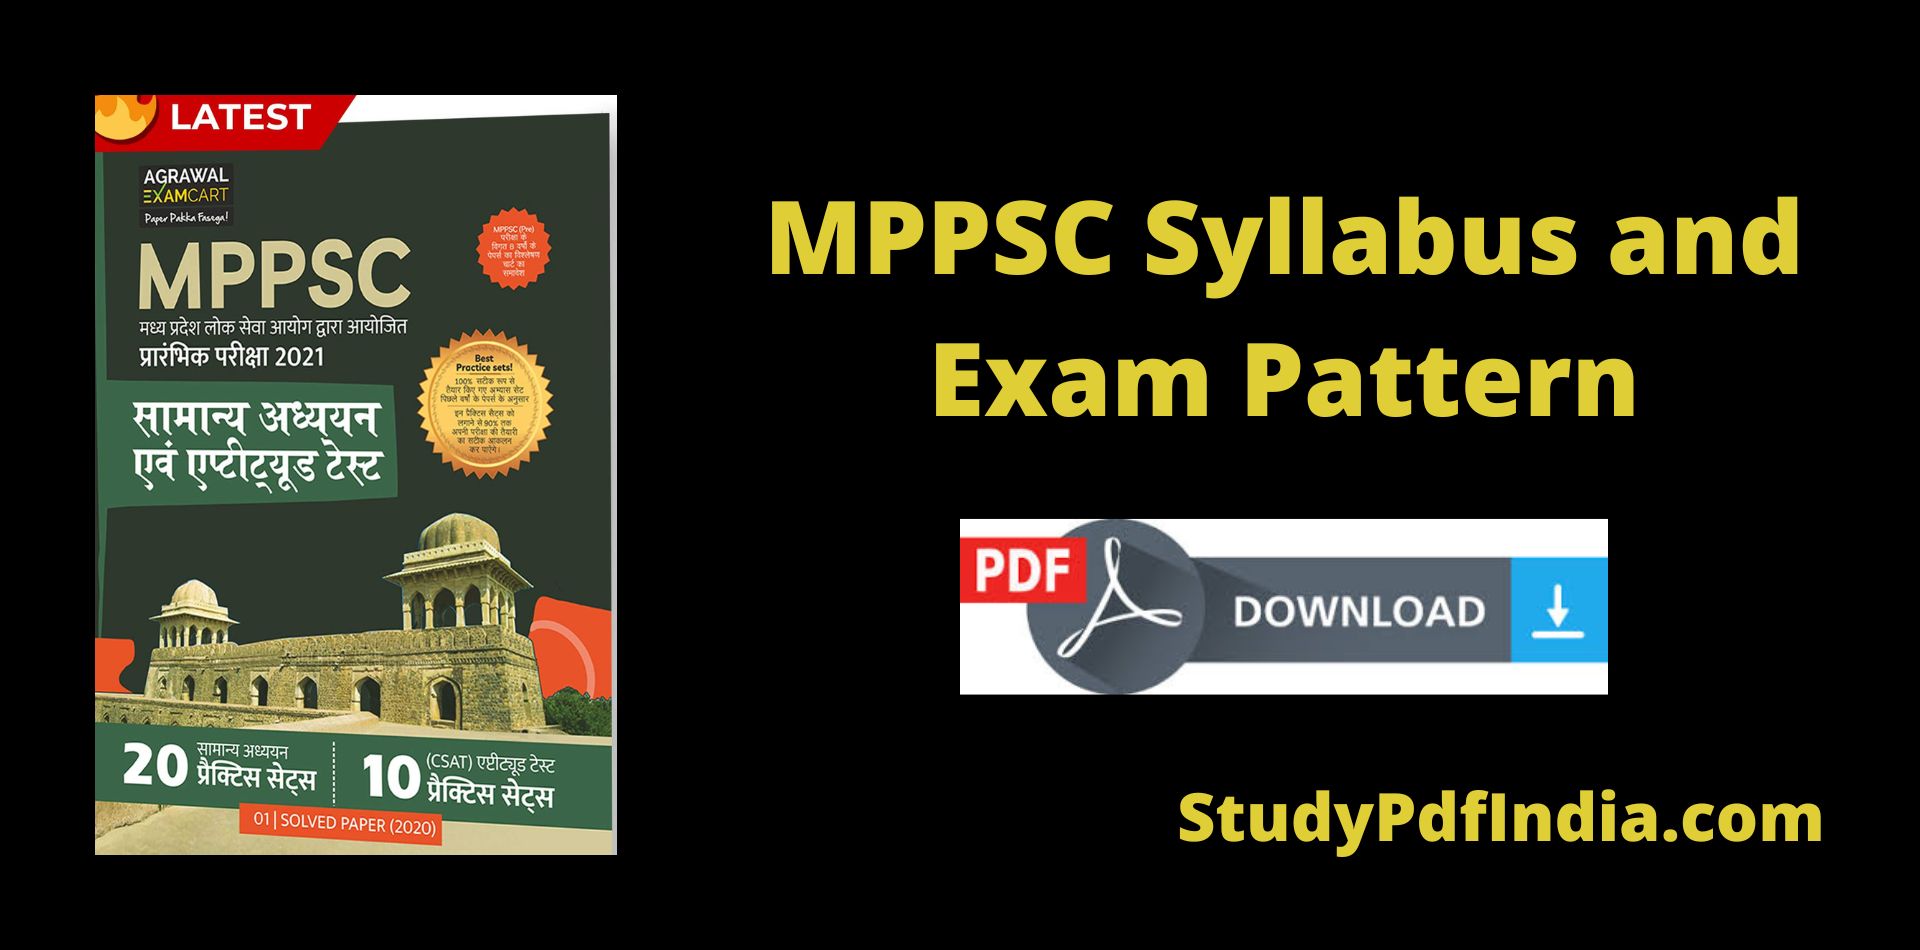 MPPSC Syllabus and Exam Pattern PDF in Hindi